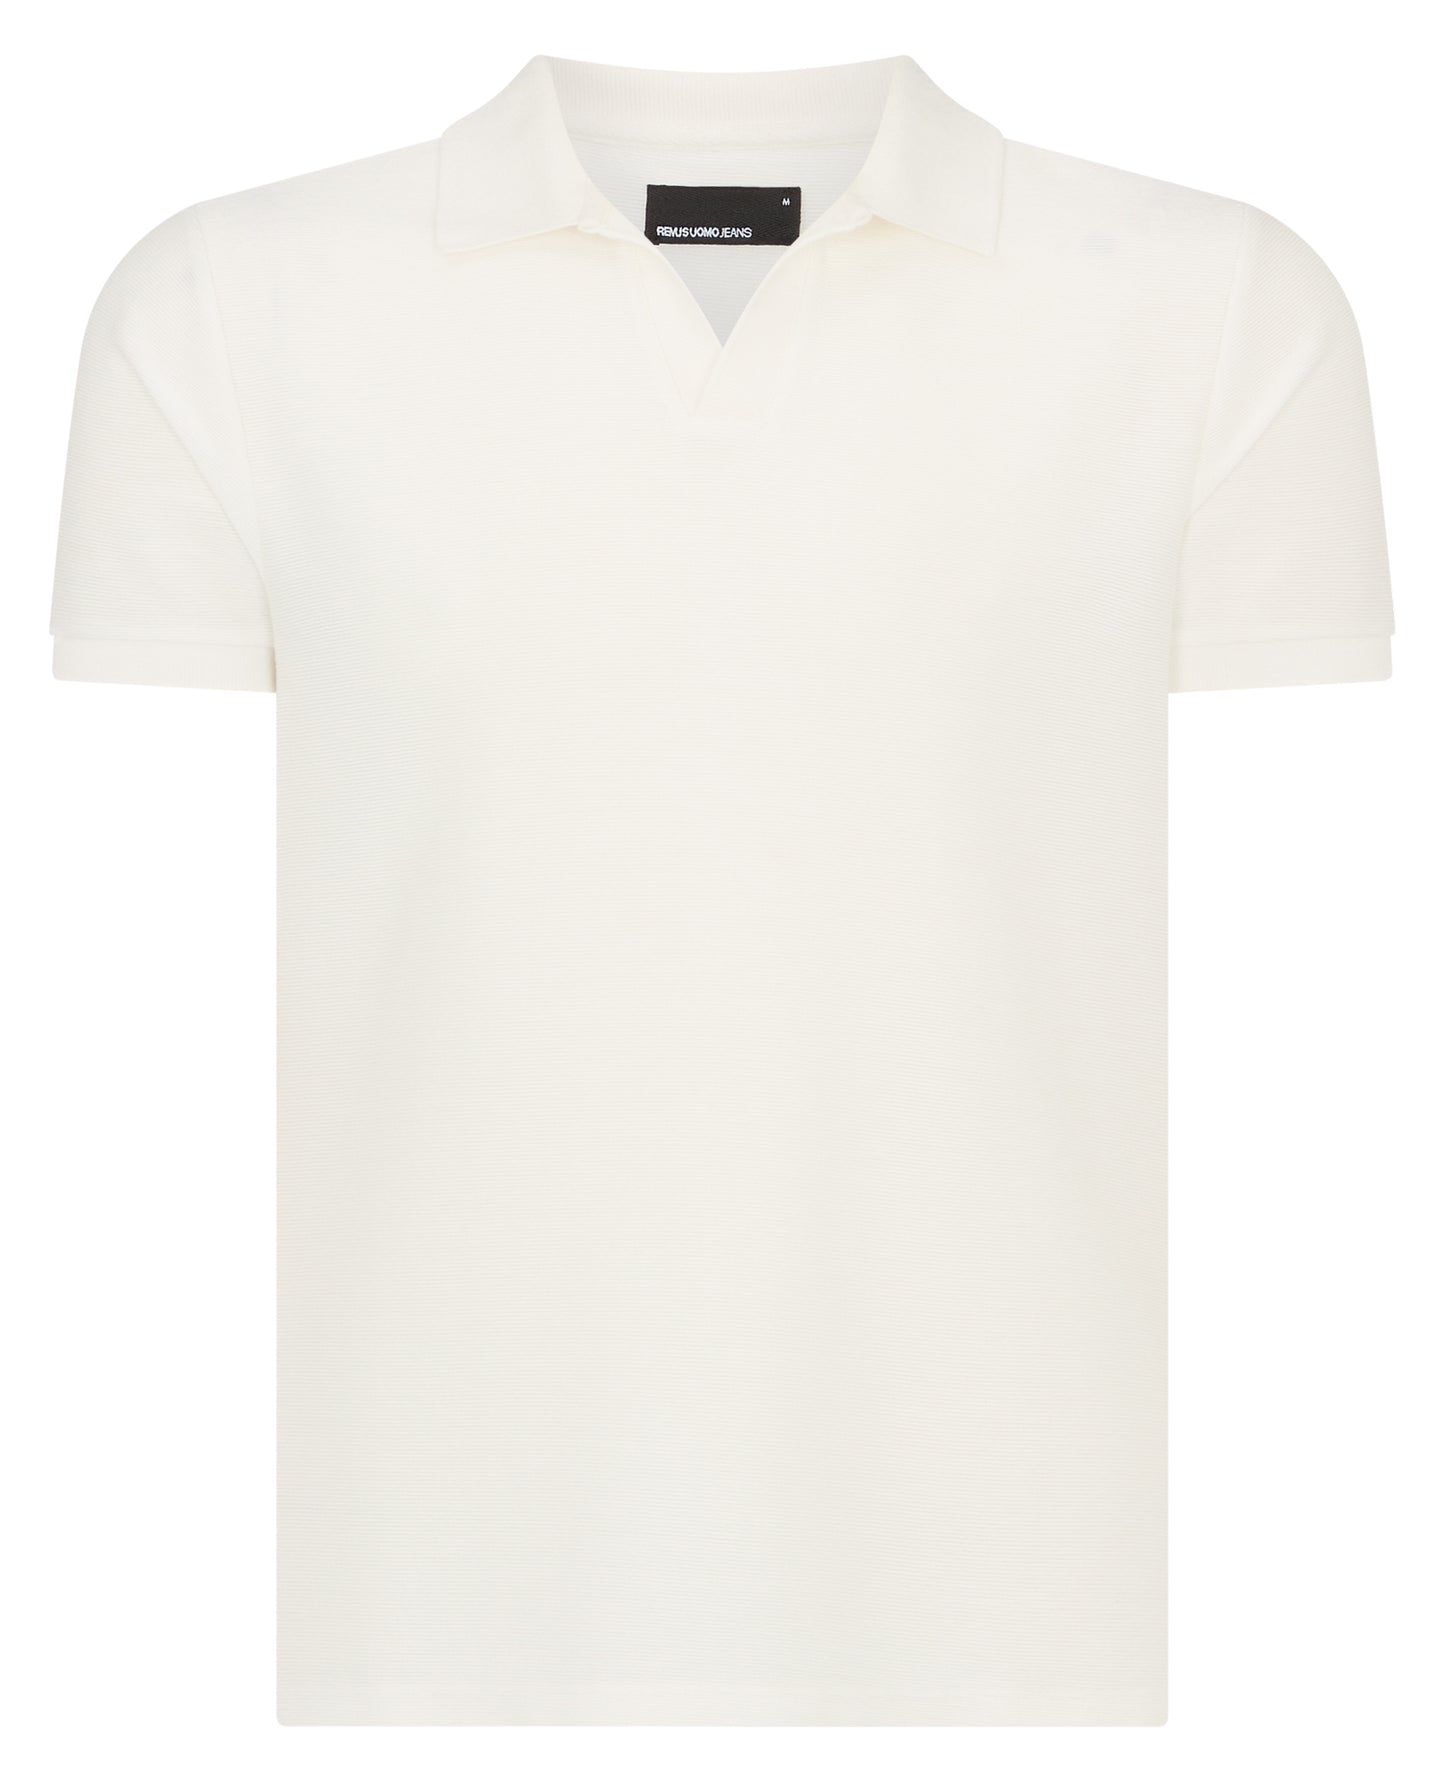 Remus Uomo Open Collar Shirt - White